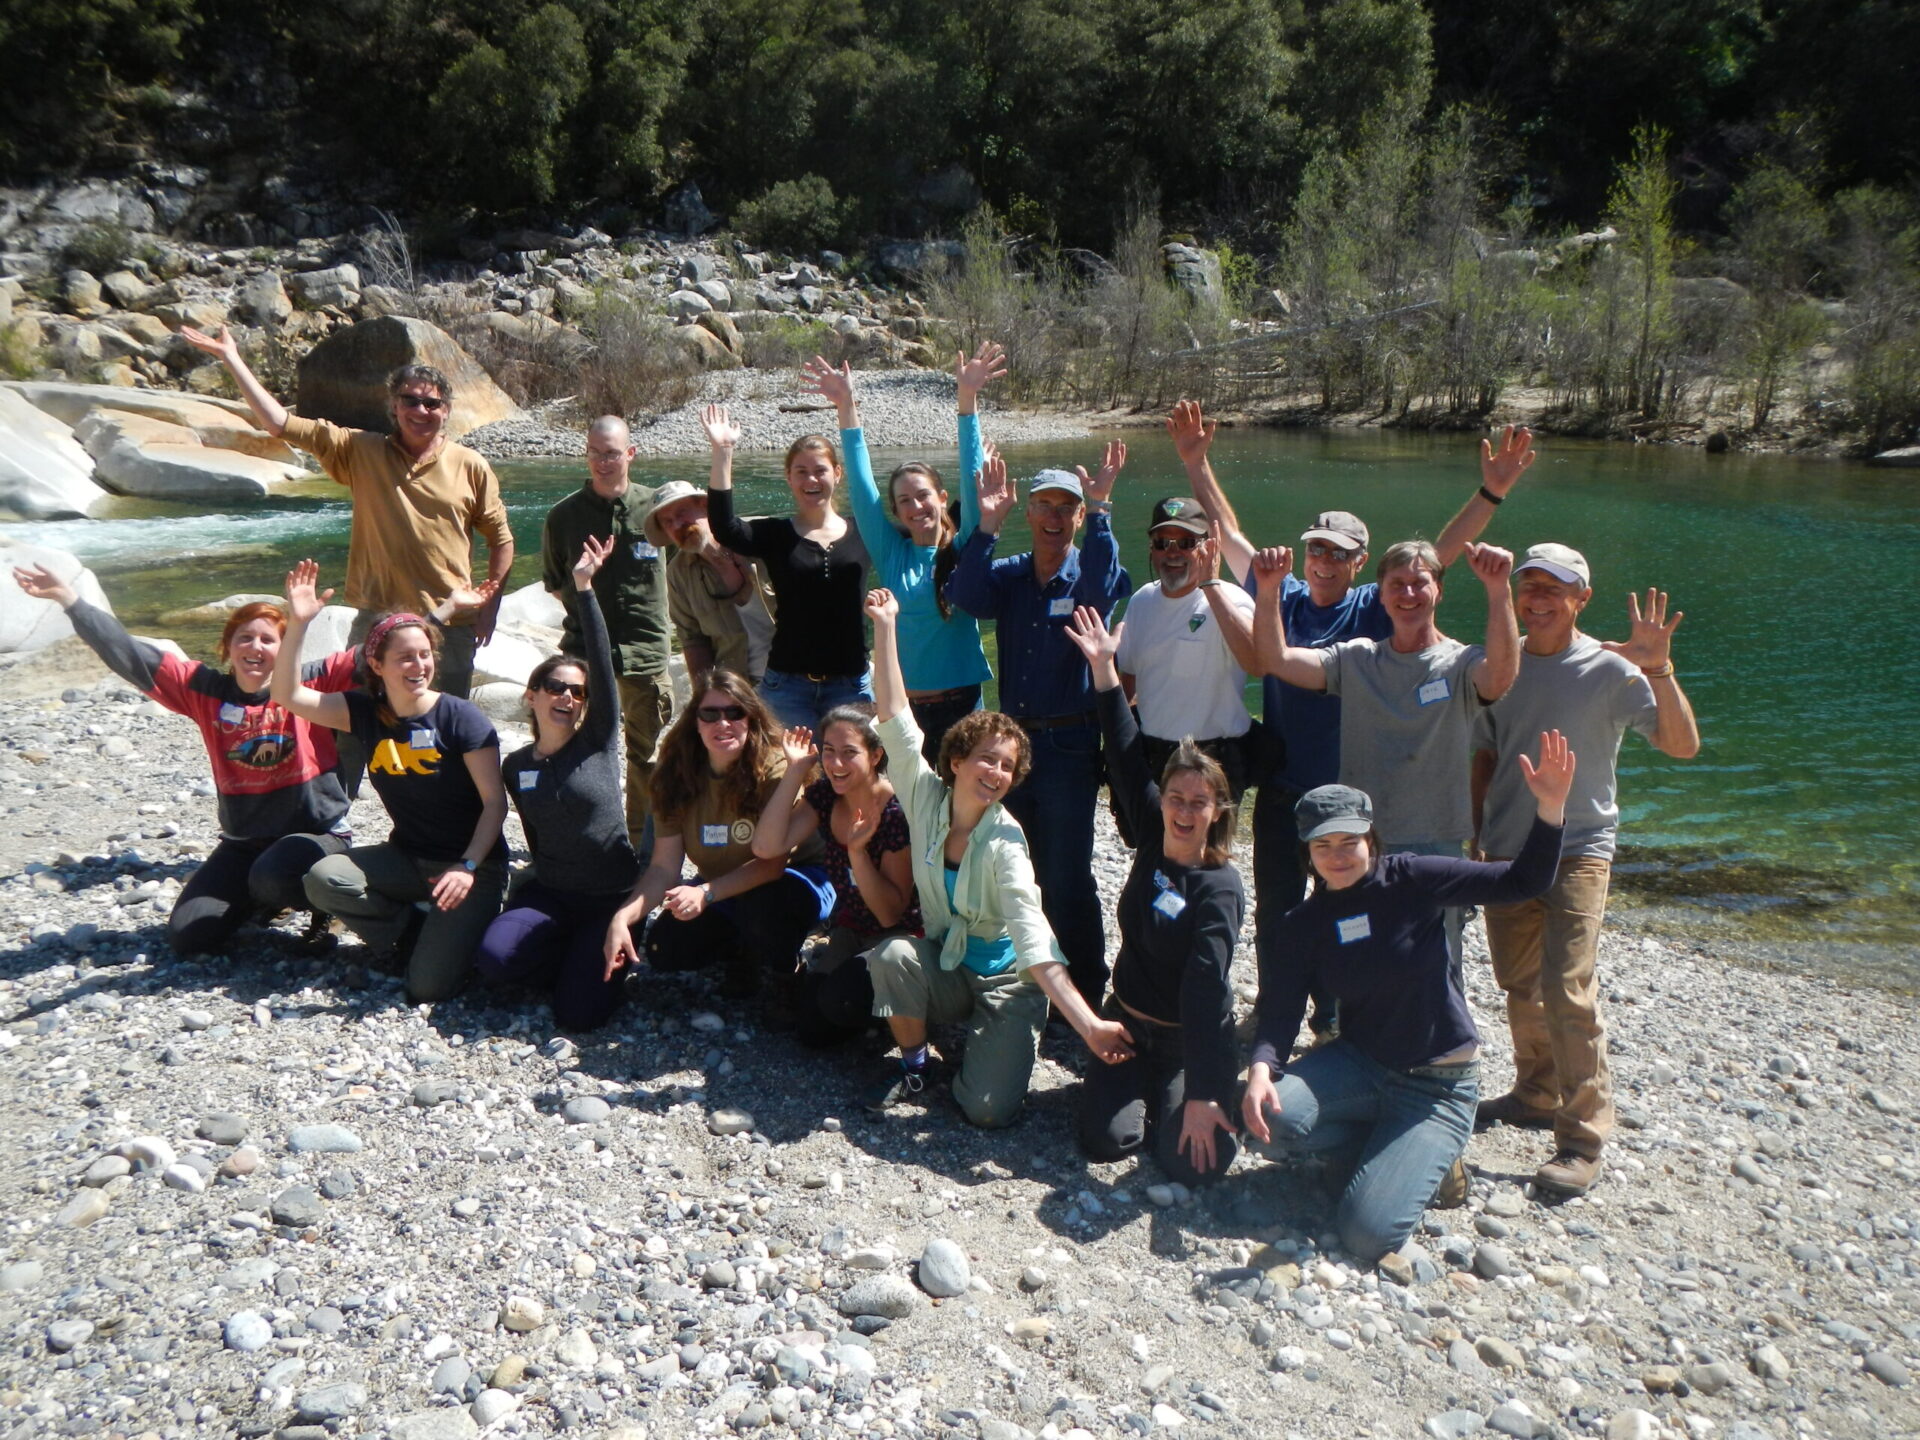 Restoration volunteers celebrate hard work at the South Yuba River!